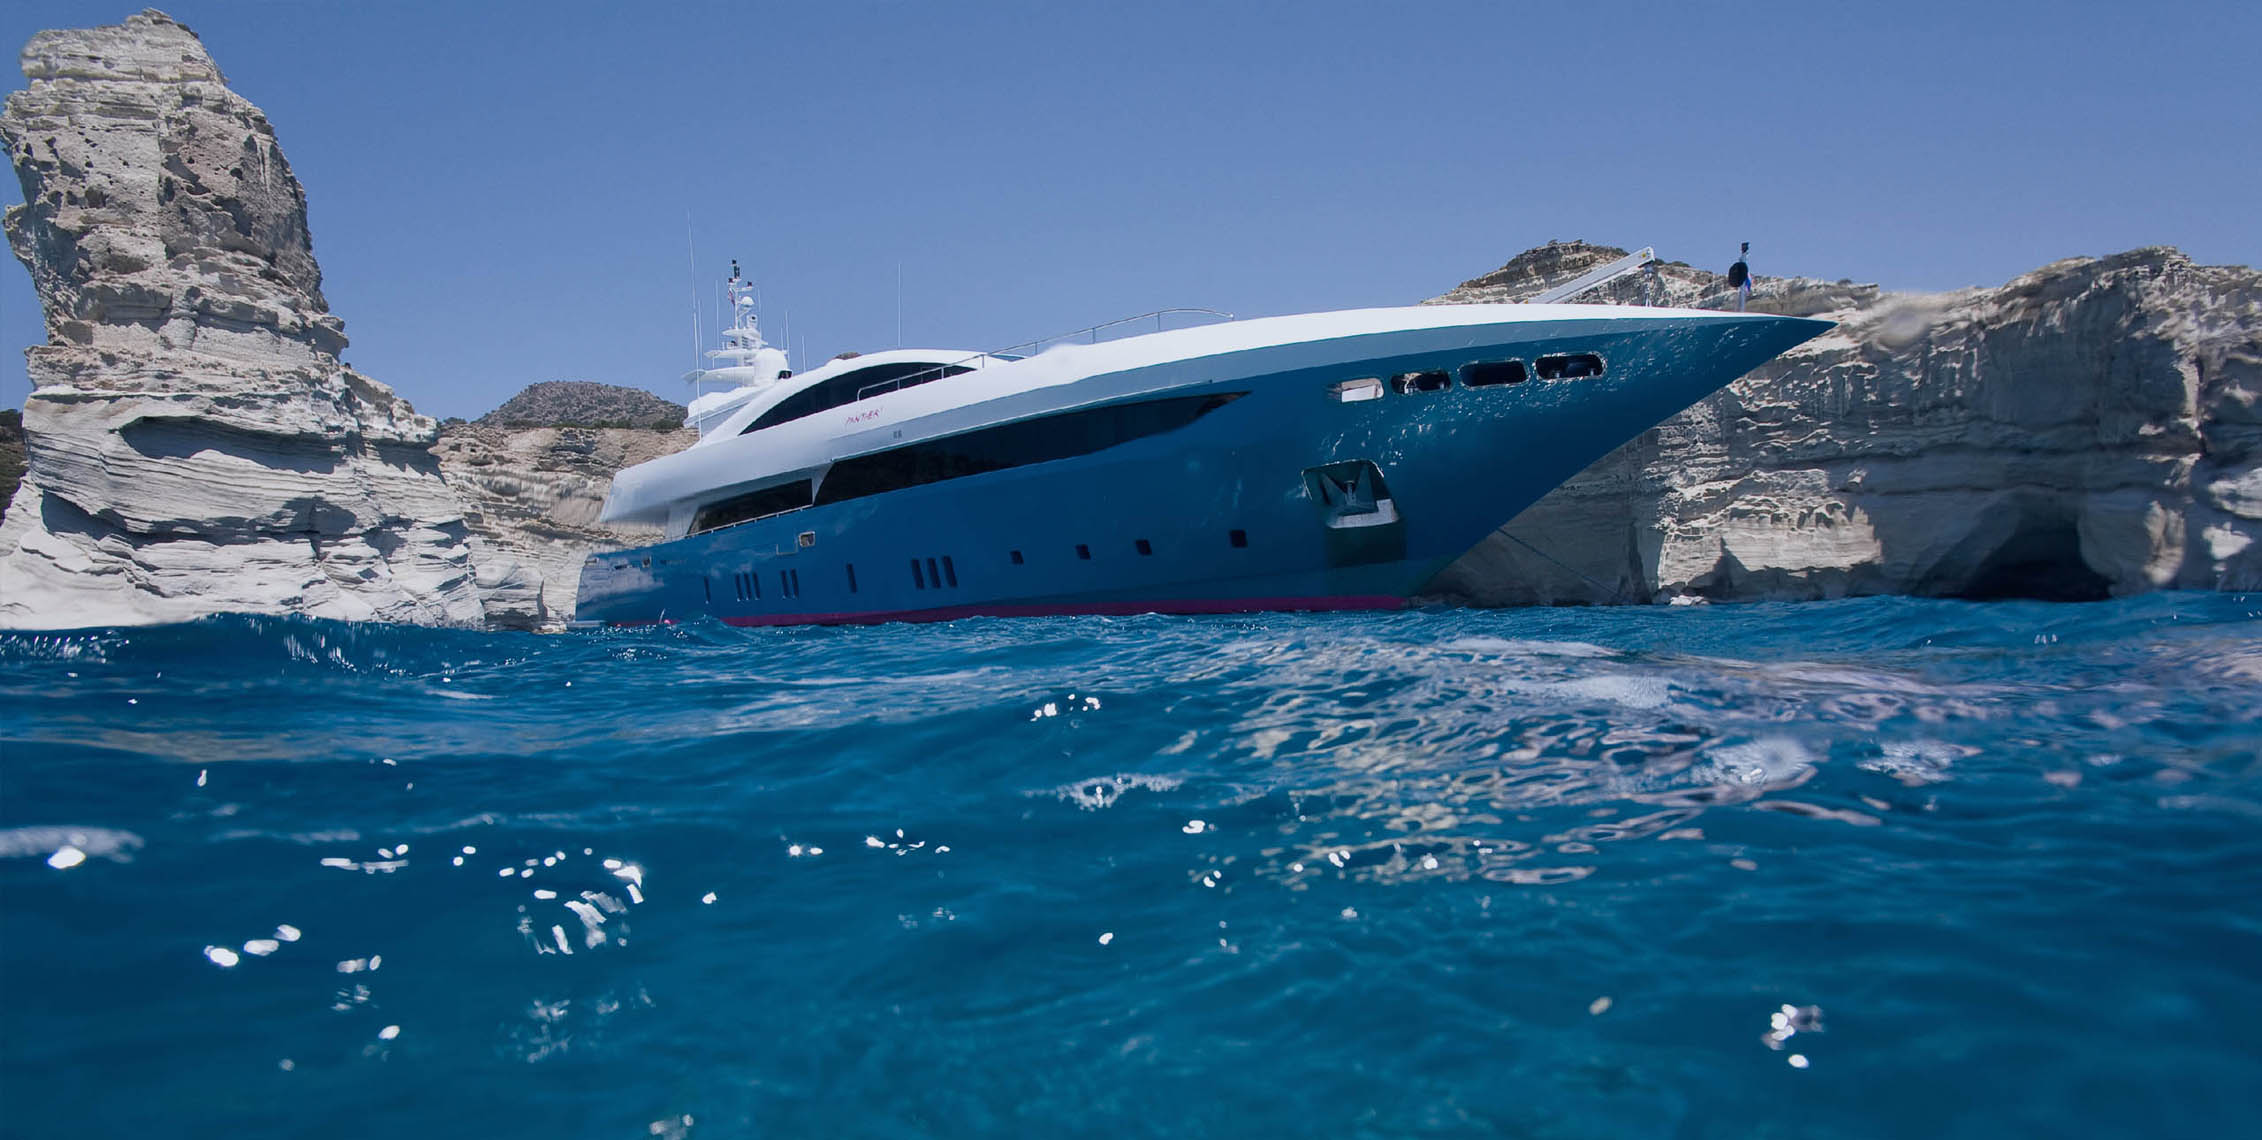 athenian yacht charter greece